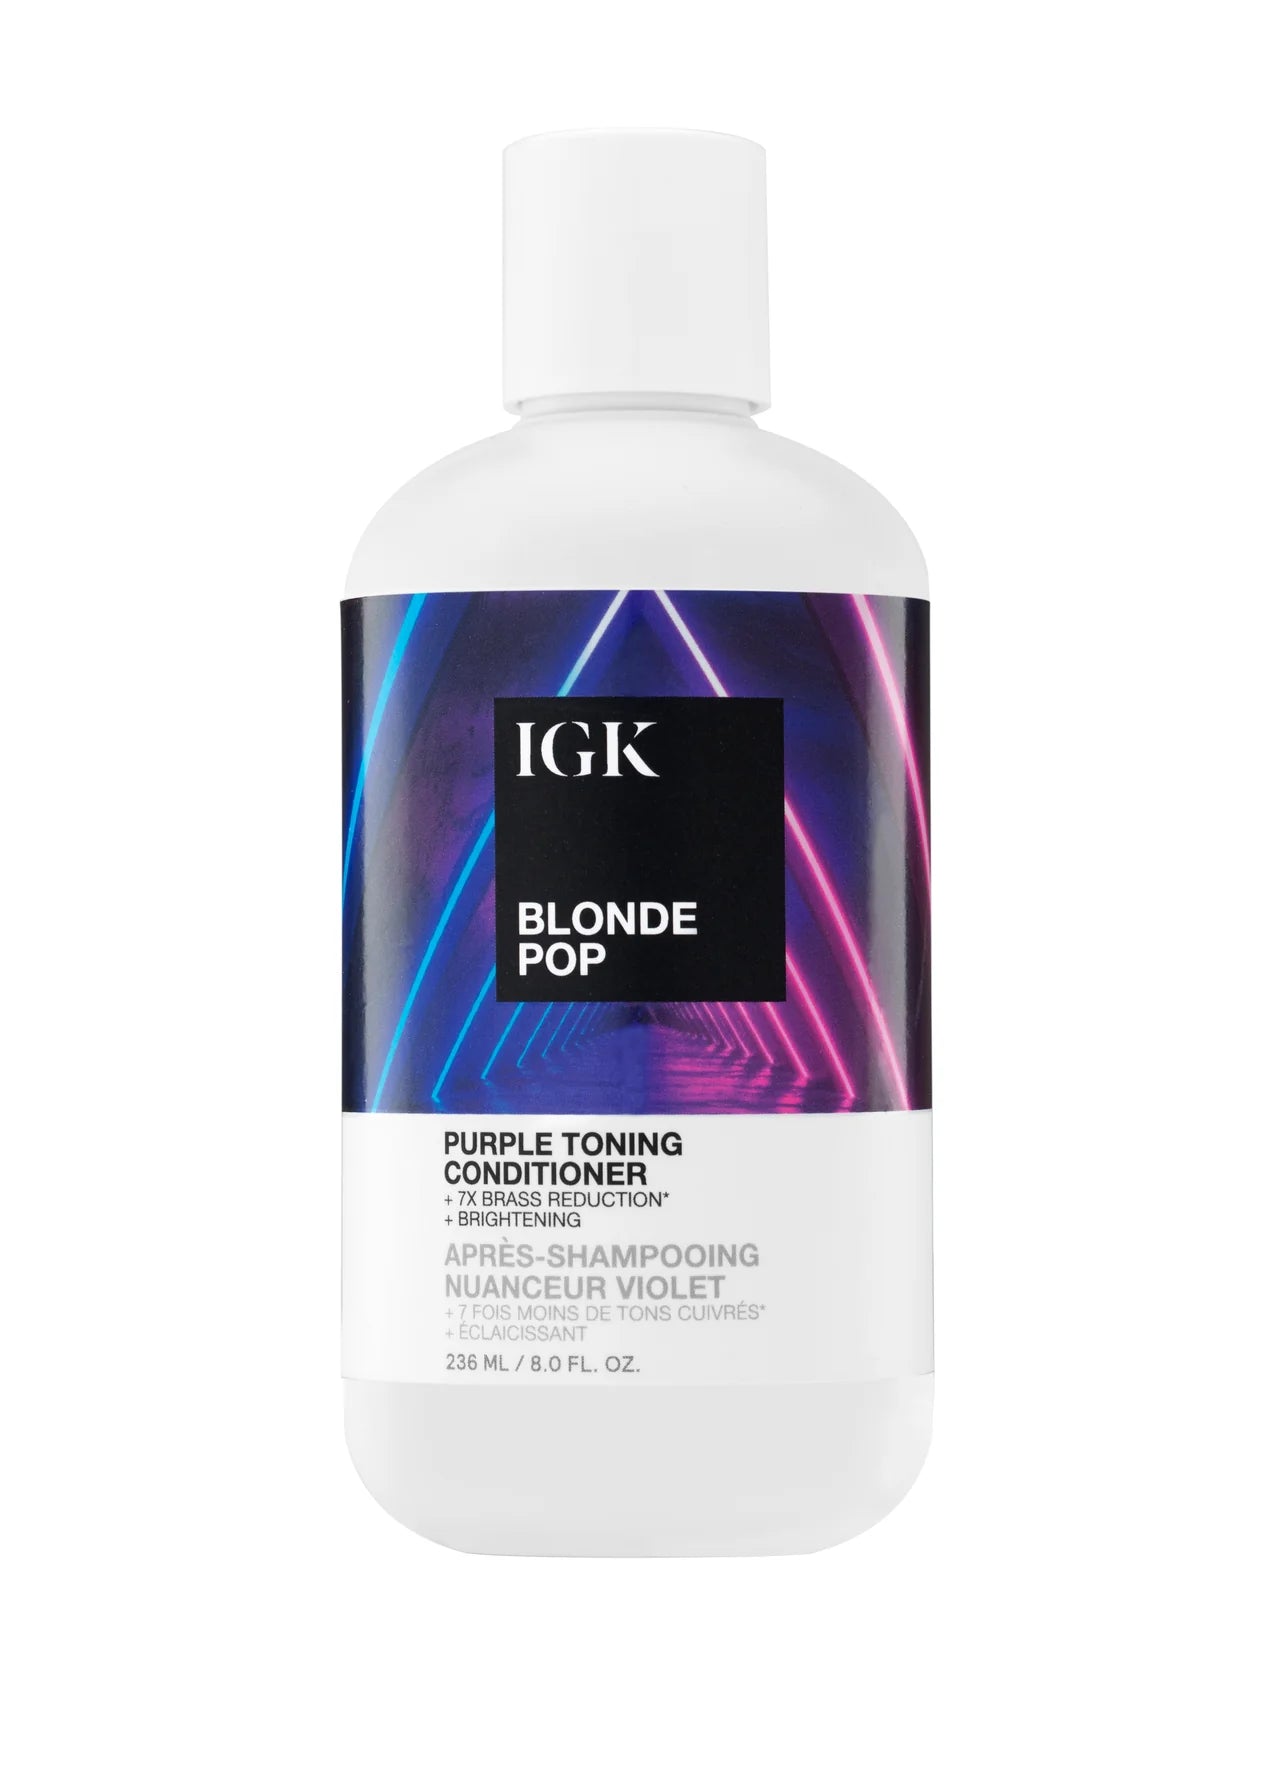 IGK Blonde Pop purple toning conditioner